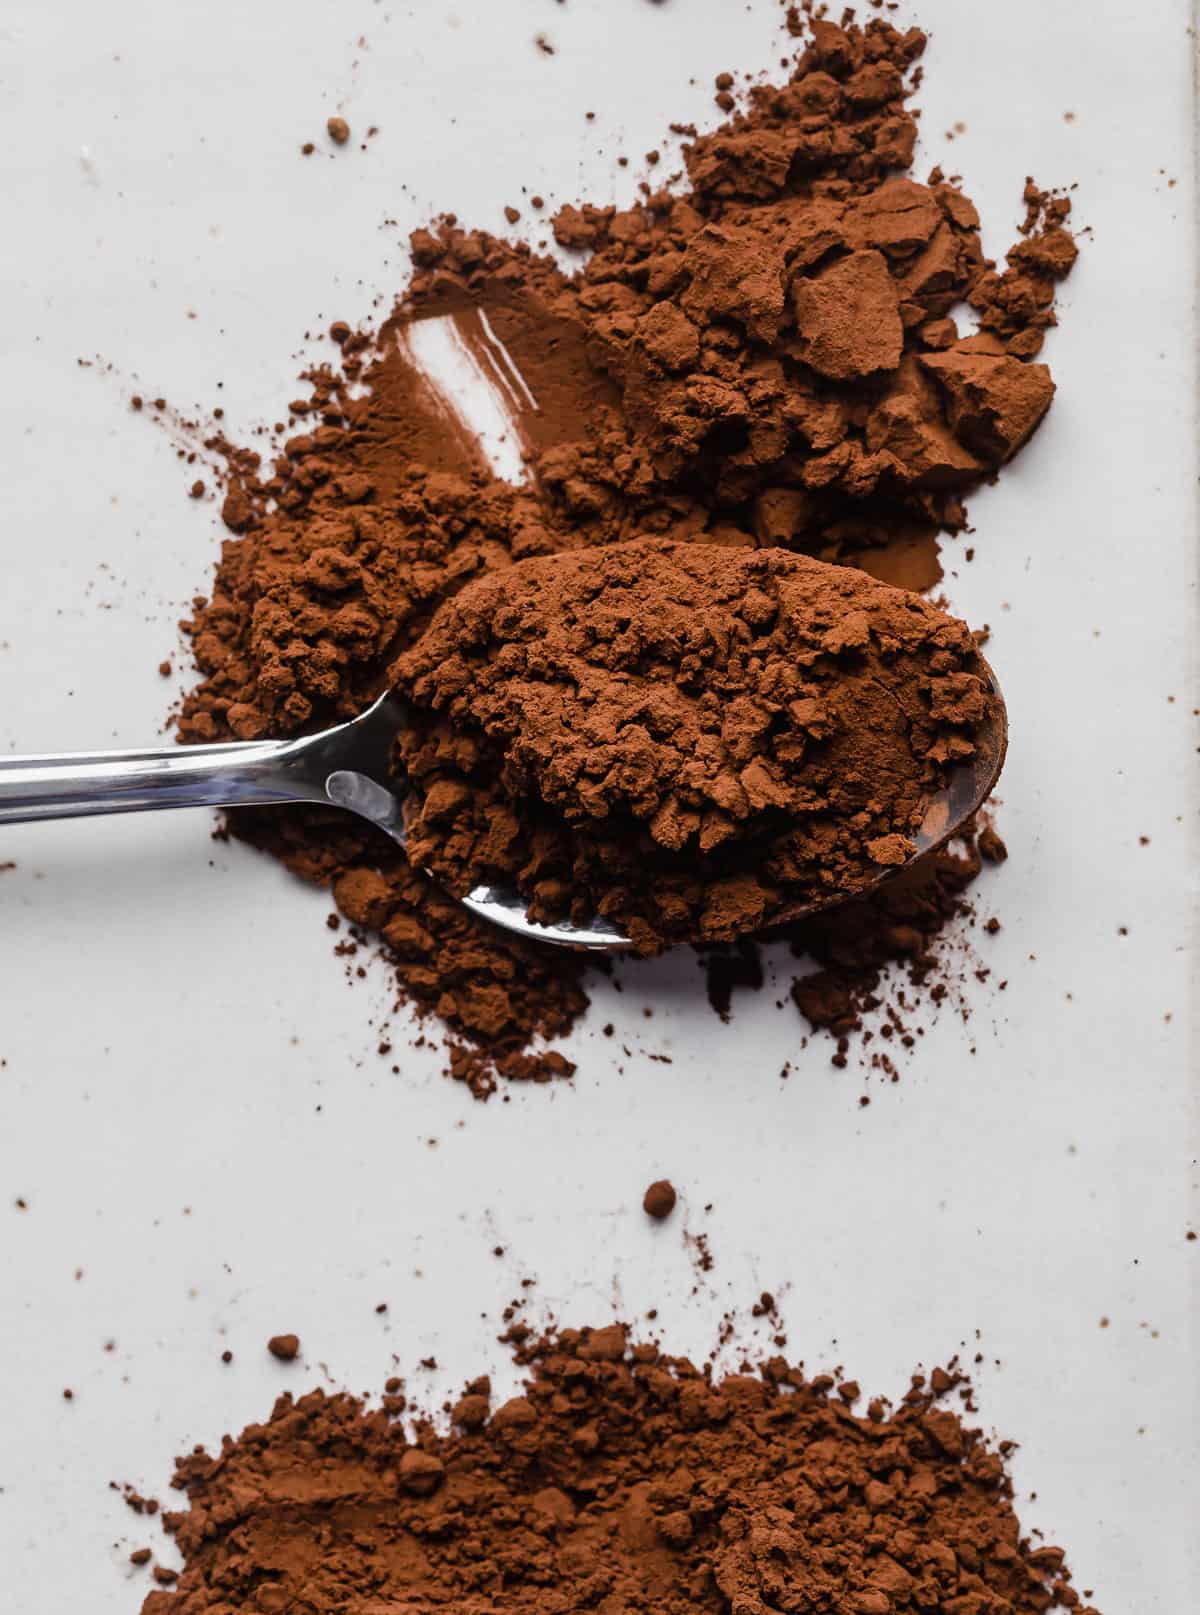 Dutch processed cocoa powder on a spoon.